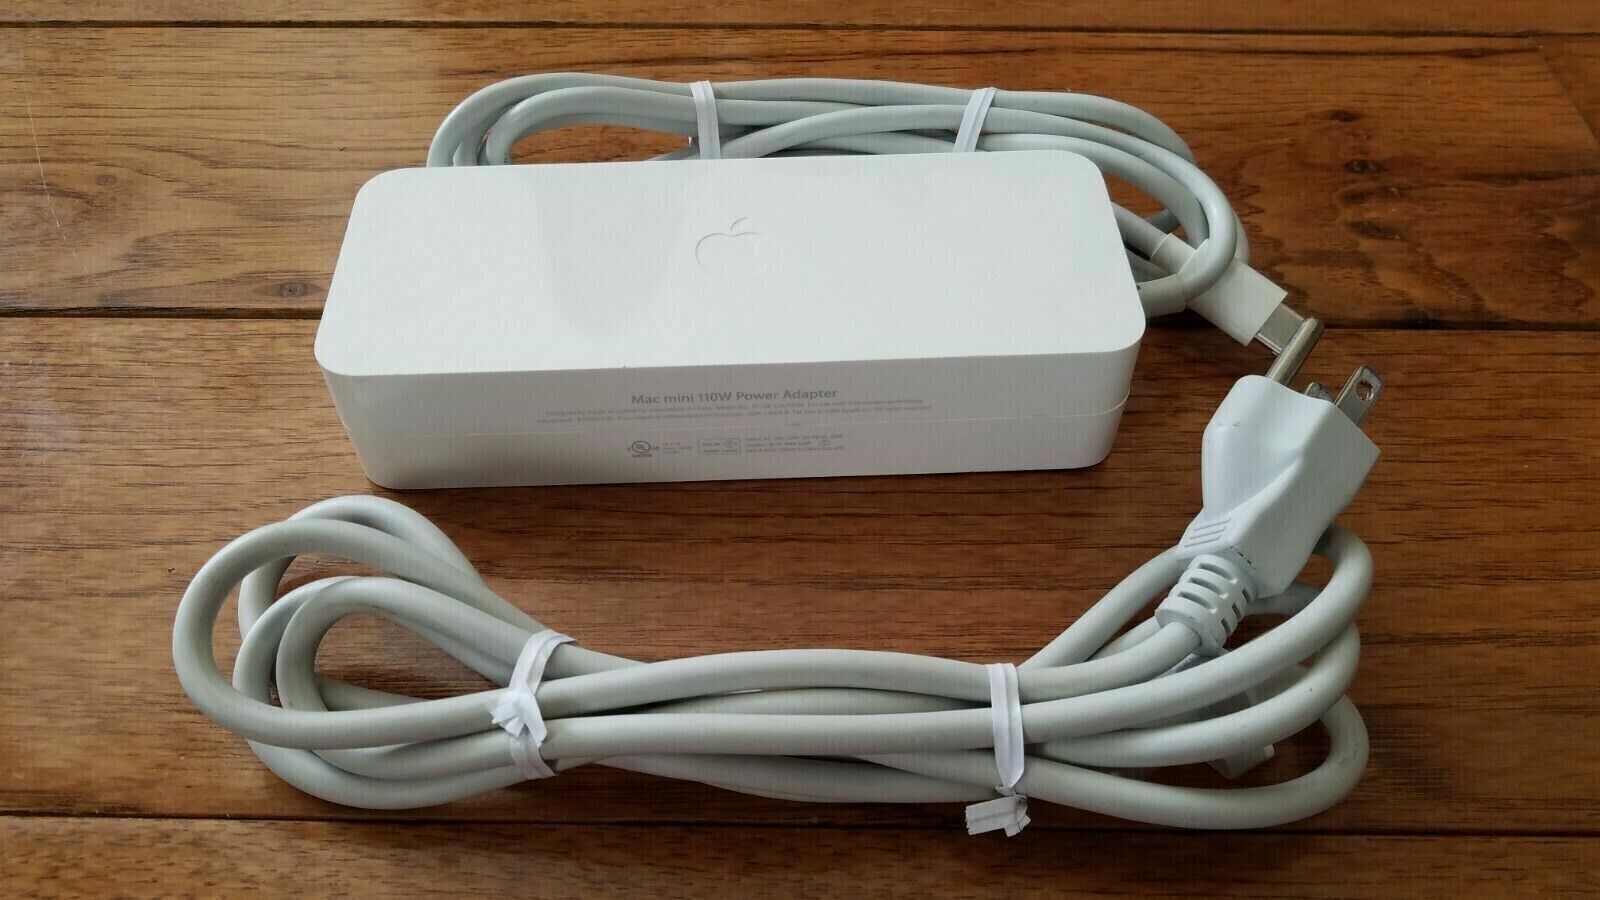 Apple Mac mini - 110W Power Adapter A1188 - OEM Genuine